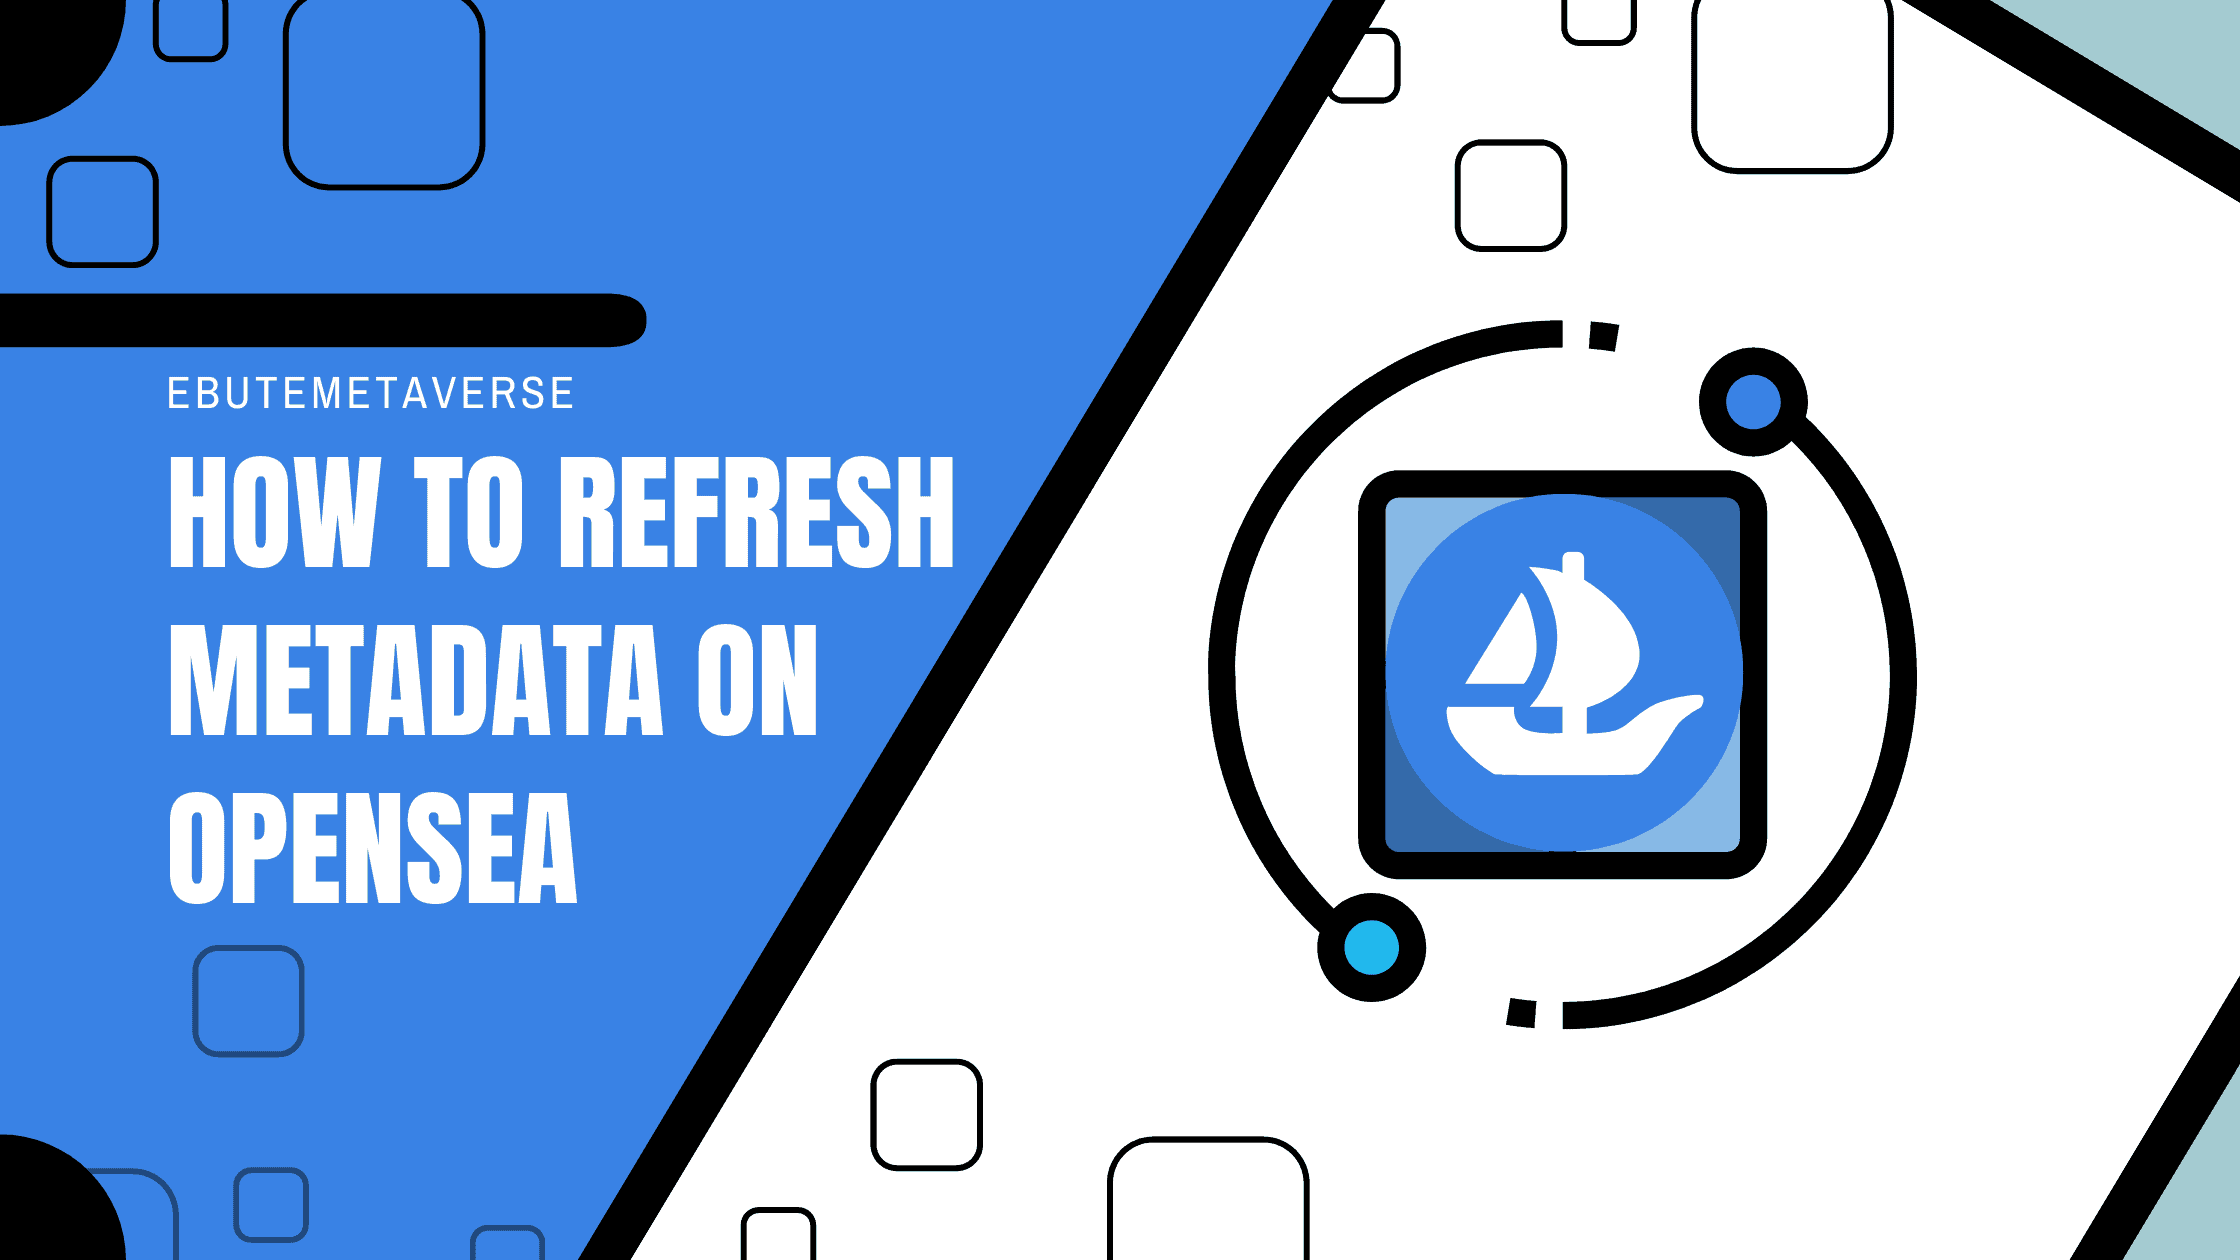 How to refresh metadata on opensea